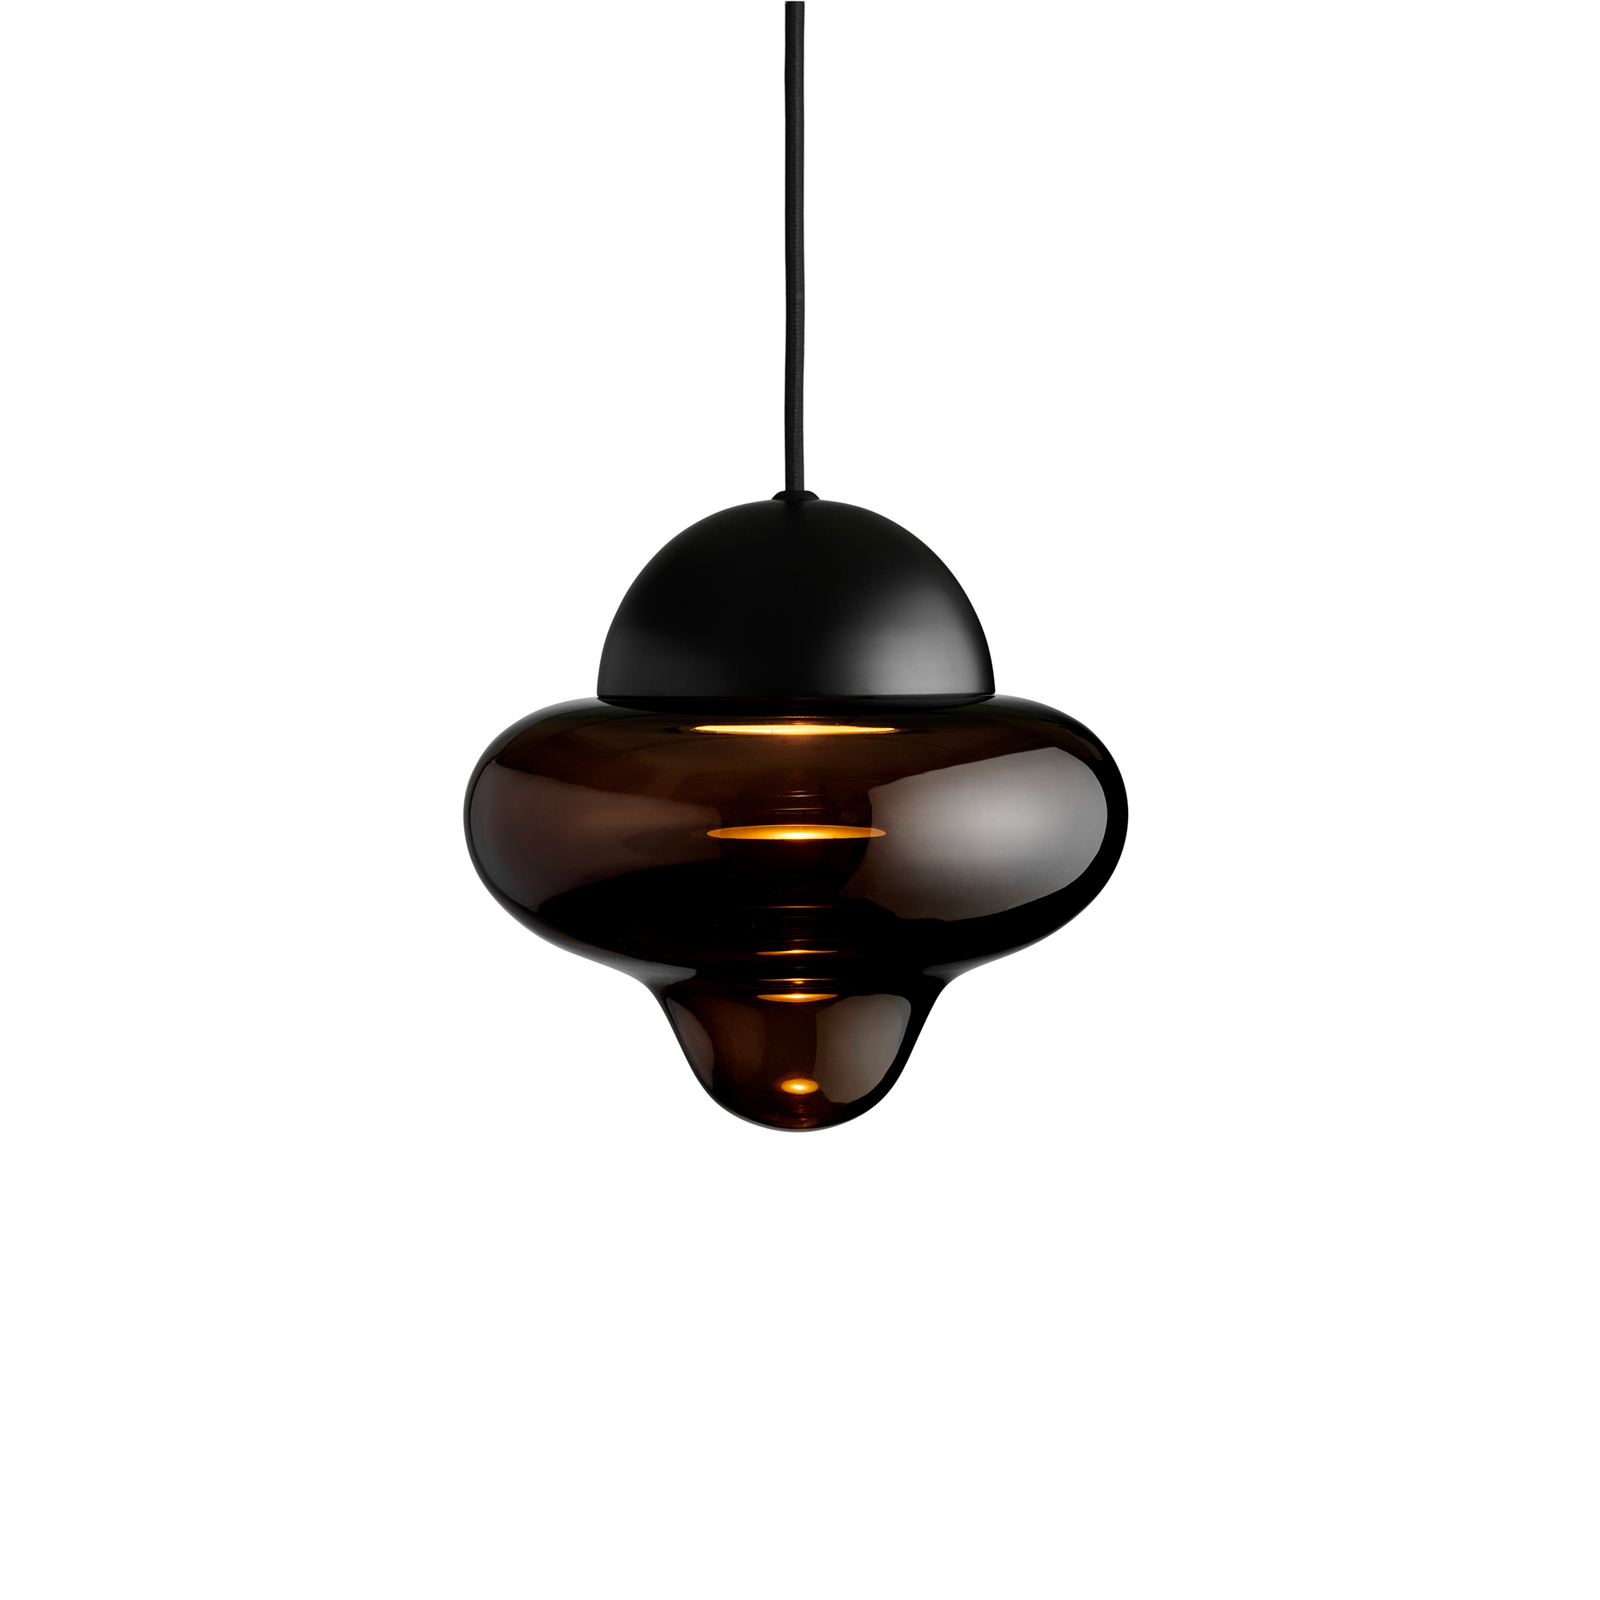 Nootachtige LED hanglamp, bruin / zwart, Ø 18,5 cm, glas